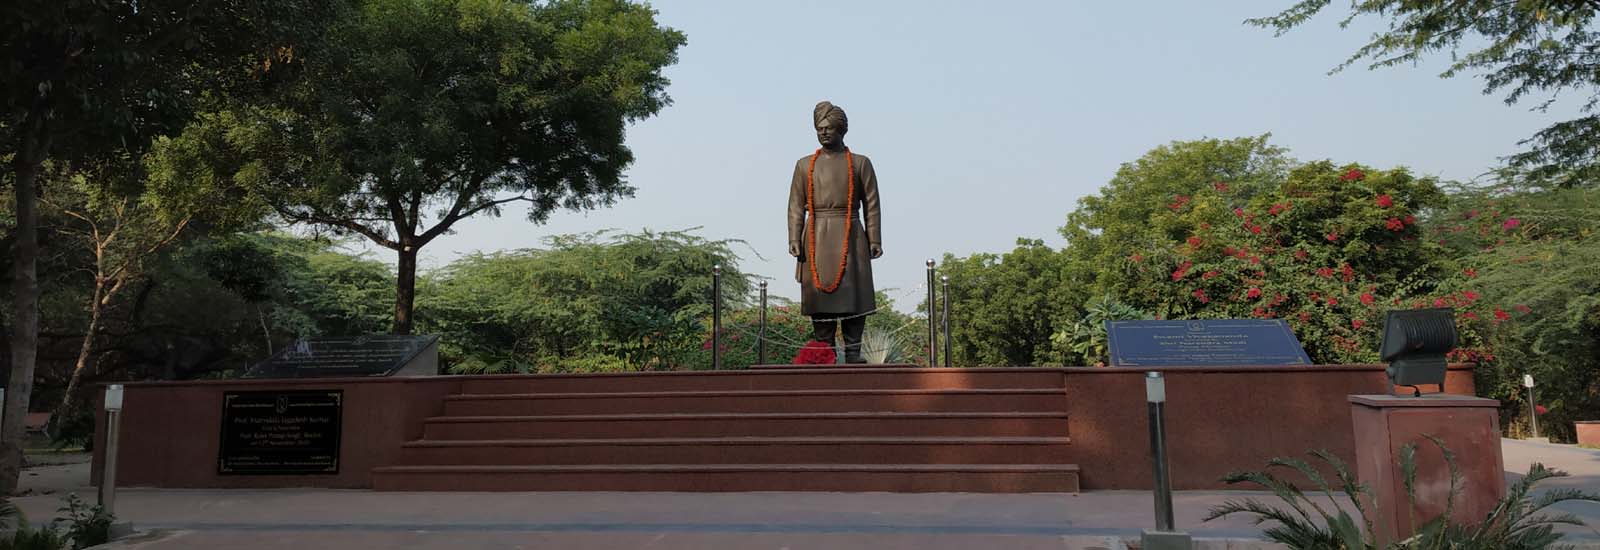 Swami Vivekanand Ji